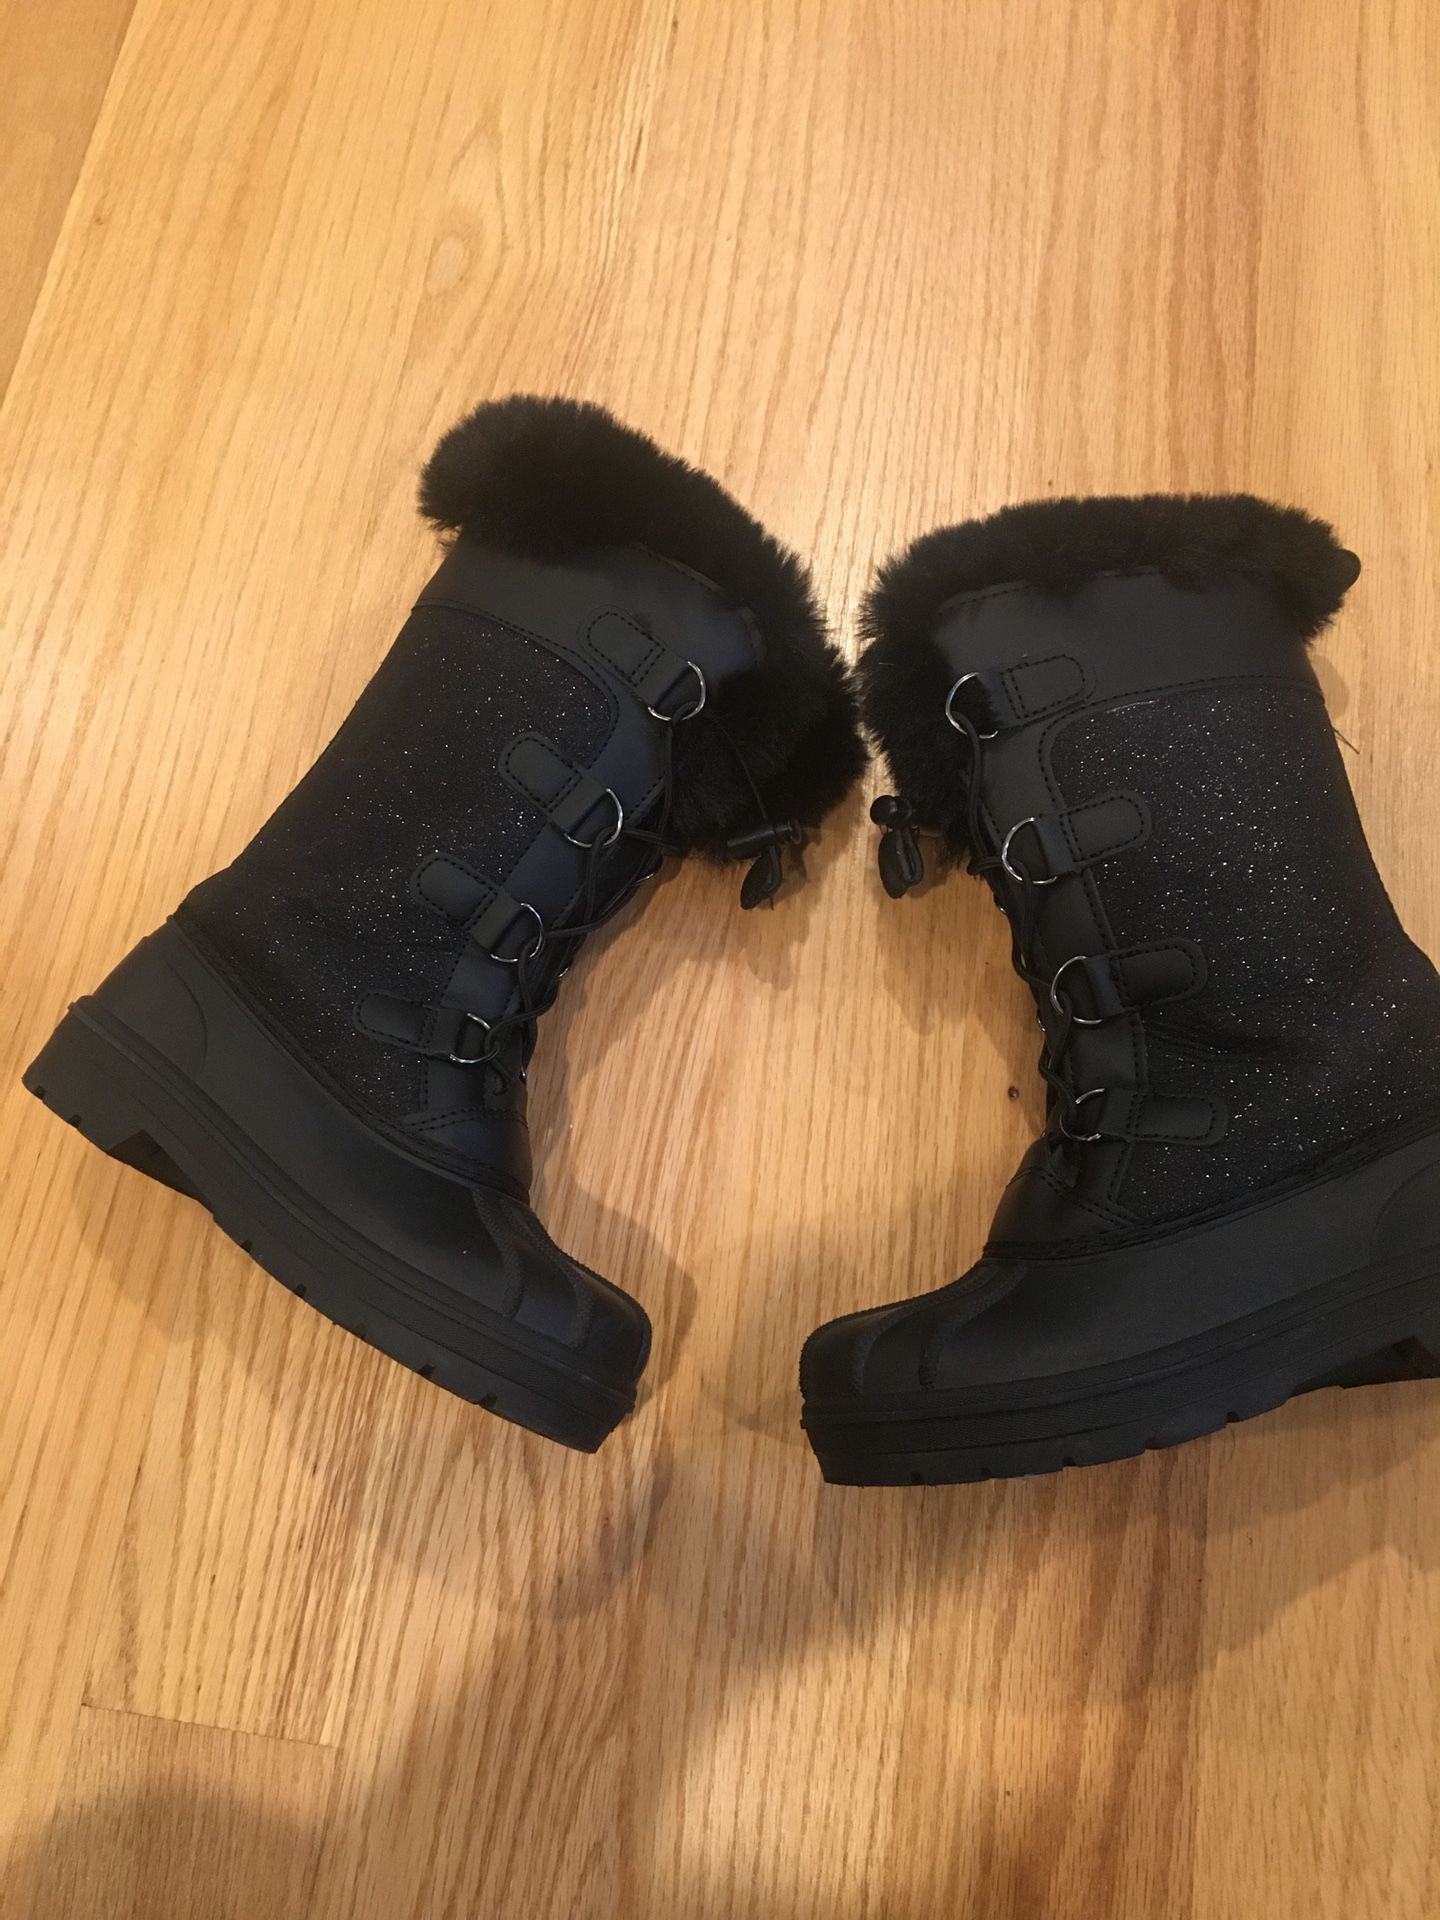 Girls Cat & Jack Winter Boots Size 13 